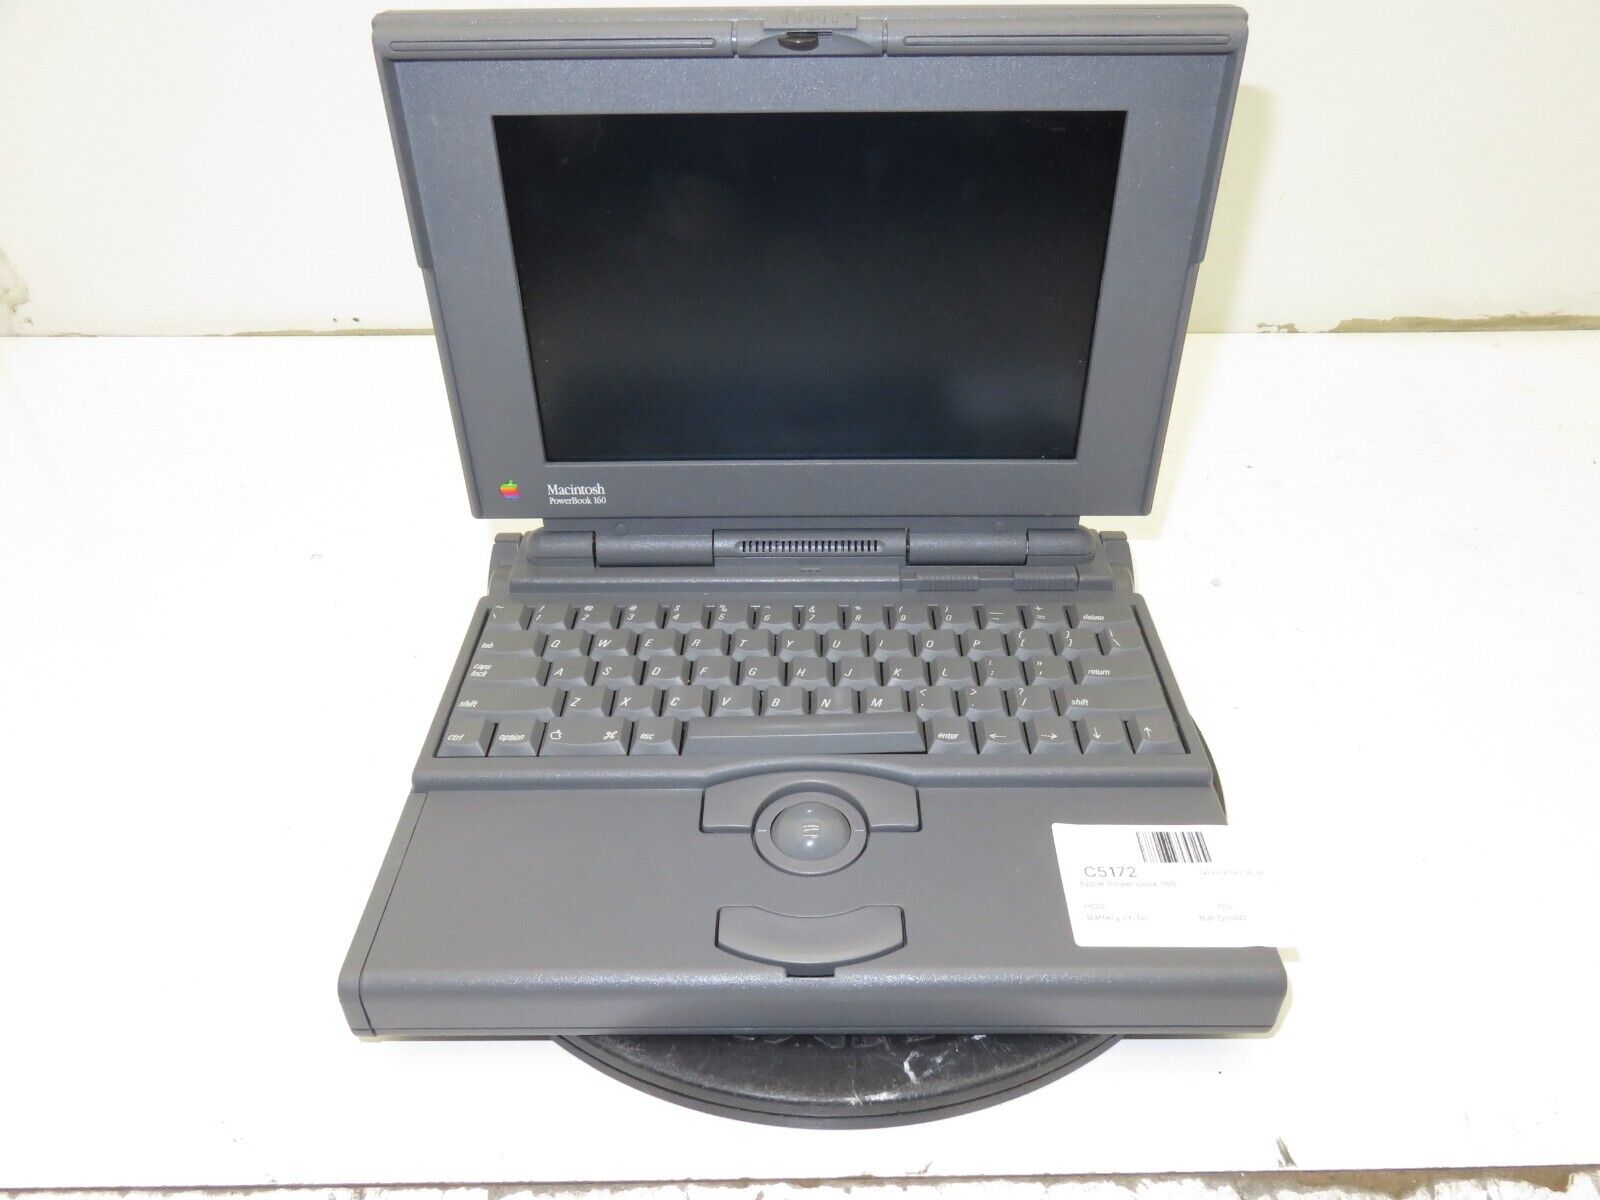 Apple PowerBook 160 M4550 Laptop Motorola 68030 25MHz - Parts/Repair